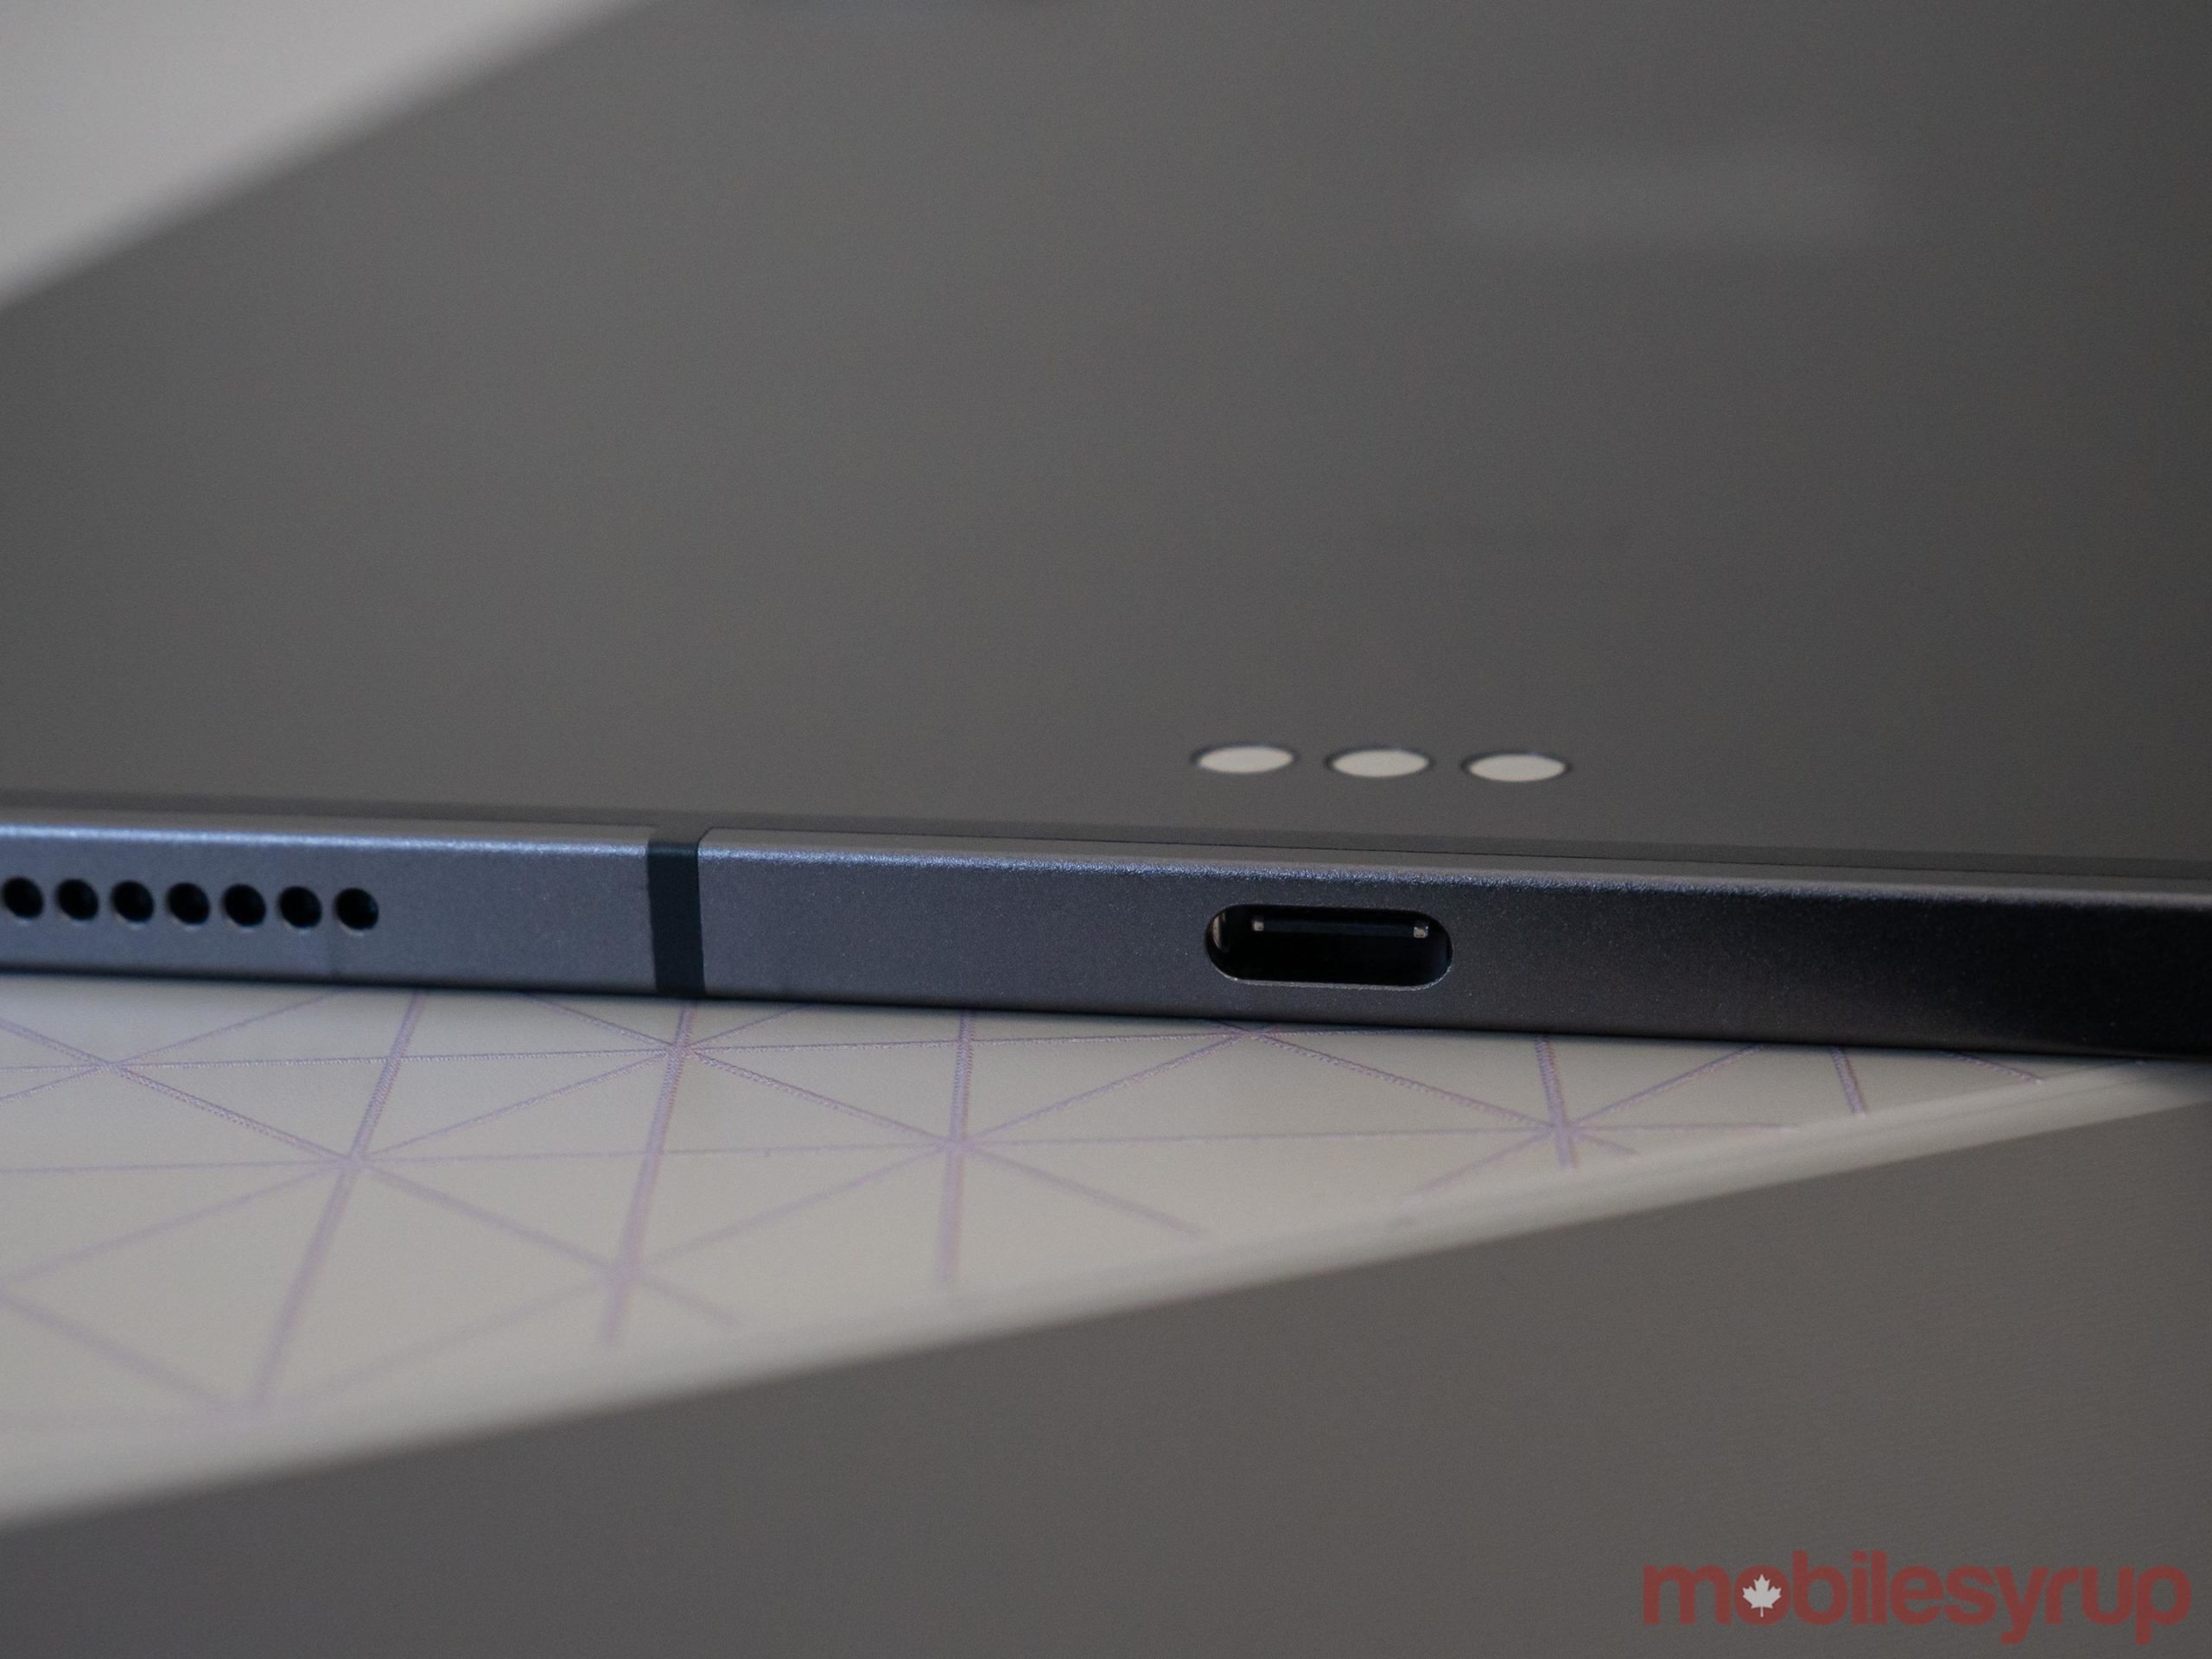 iPad Pro (2020) USB-C port